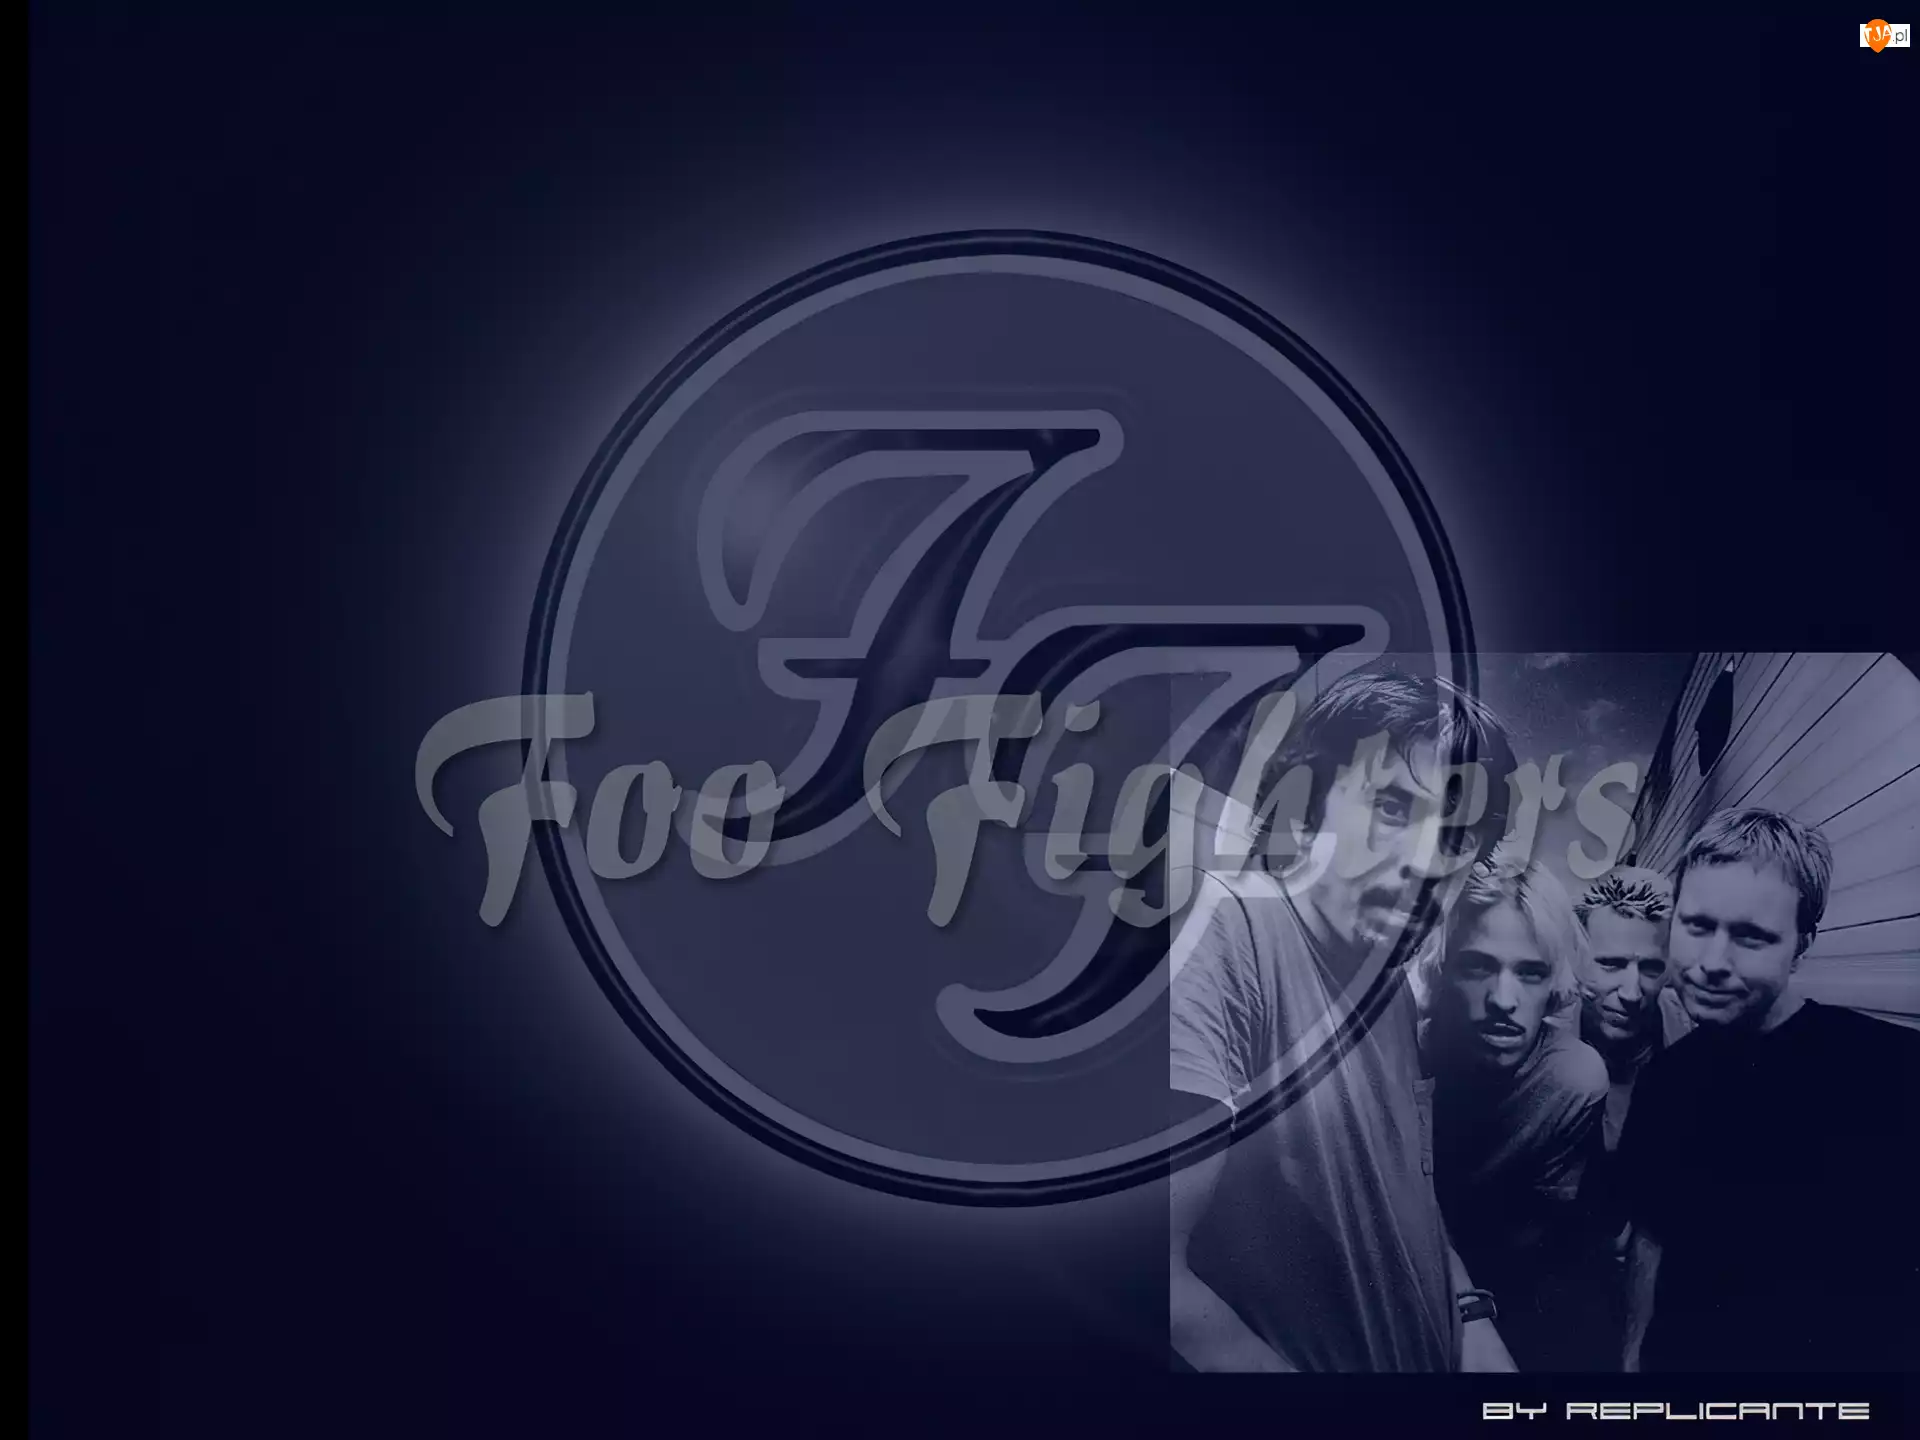 zespół, Foo Fighters, replicante